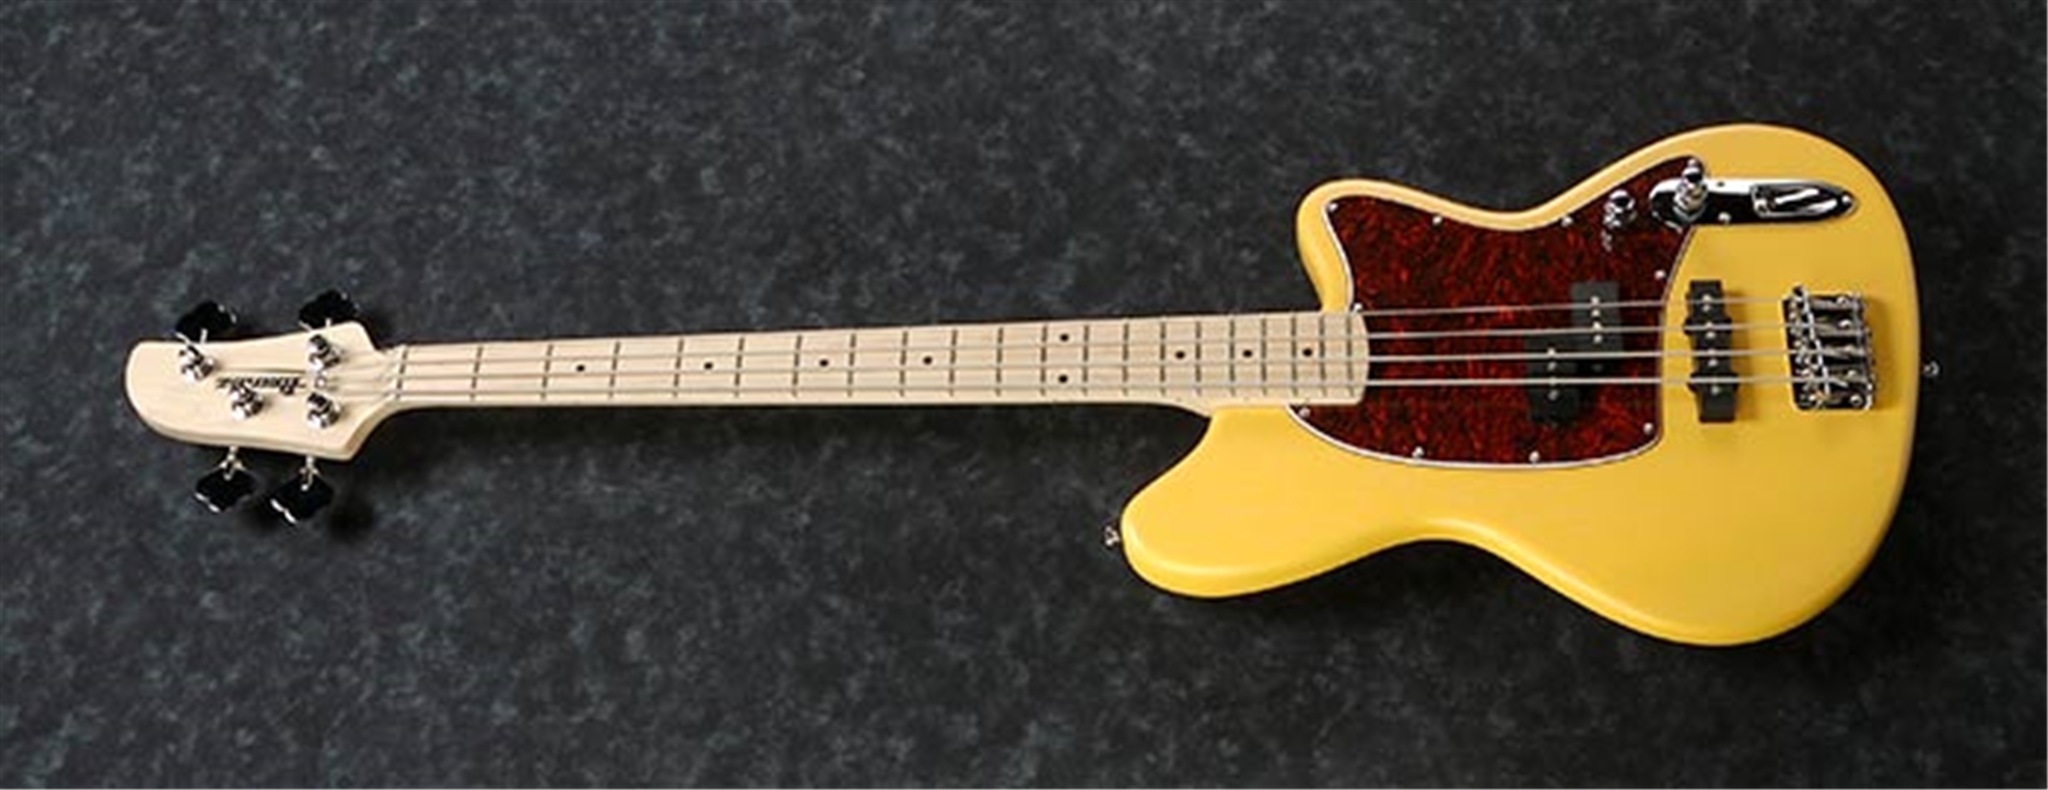 Ibanez TMB100M Mustard Yellow Flat 4-String Electric Bass Guitar  